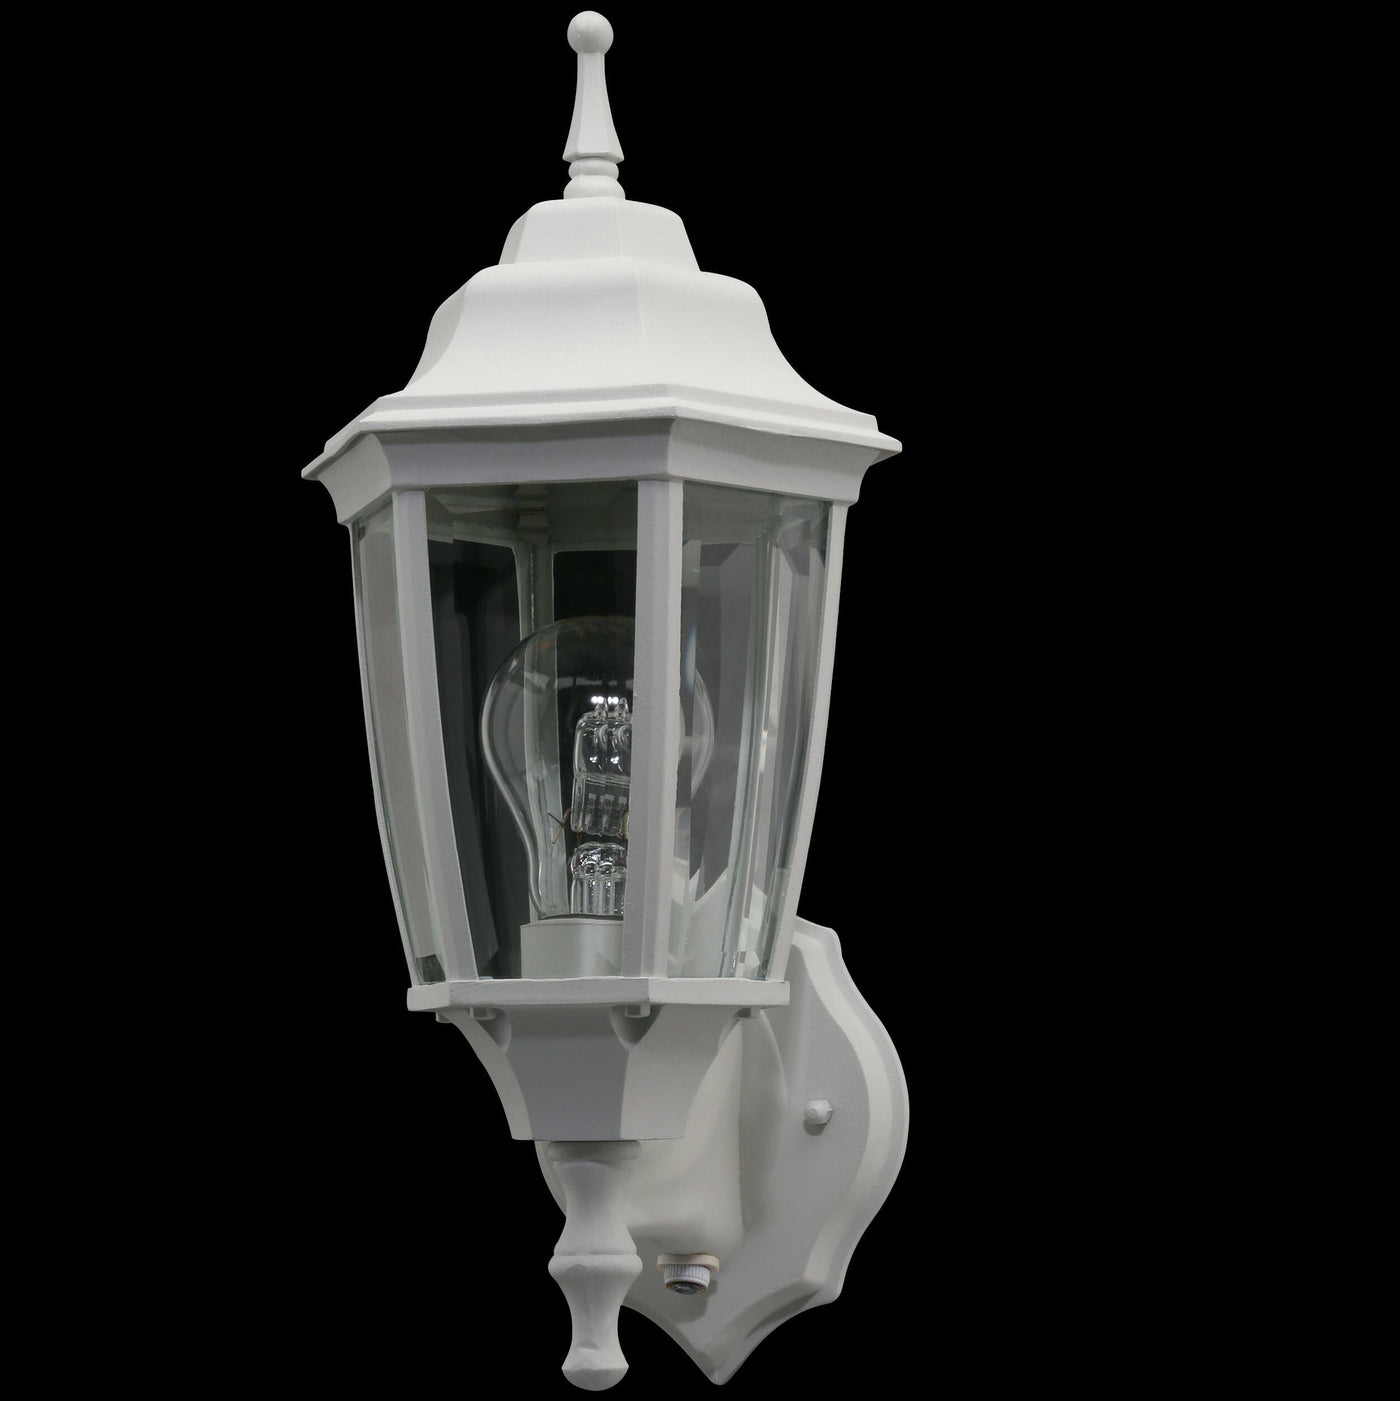 Hampton Bay 14.37 in. White Dusk to Dawn Decorative Outdoor Wall Lantern Sconce Light - $40